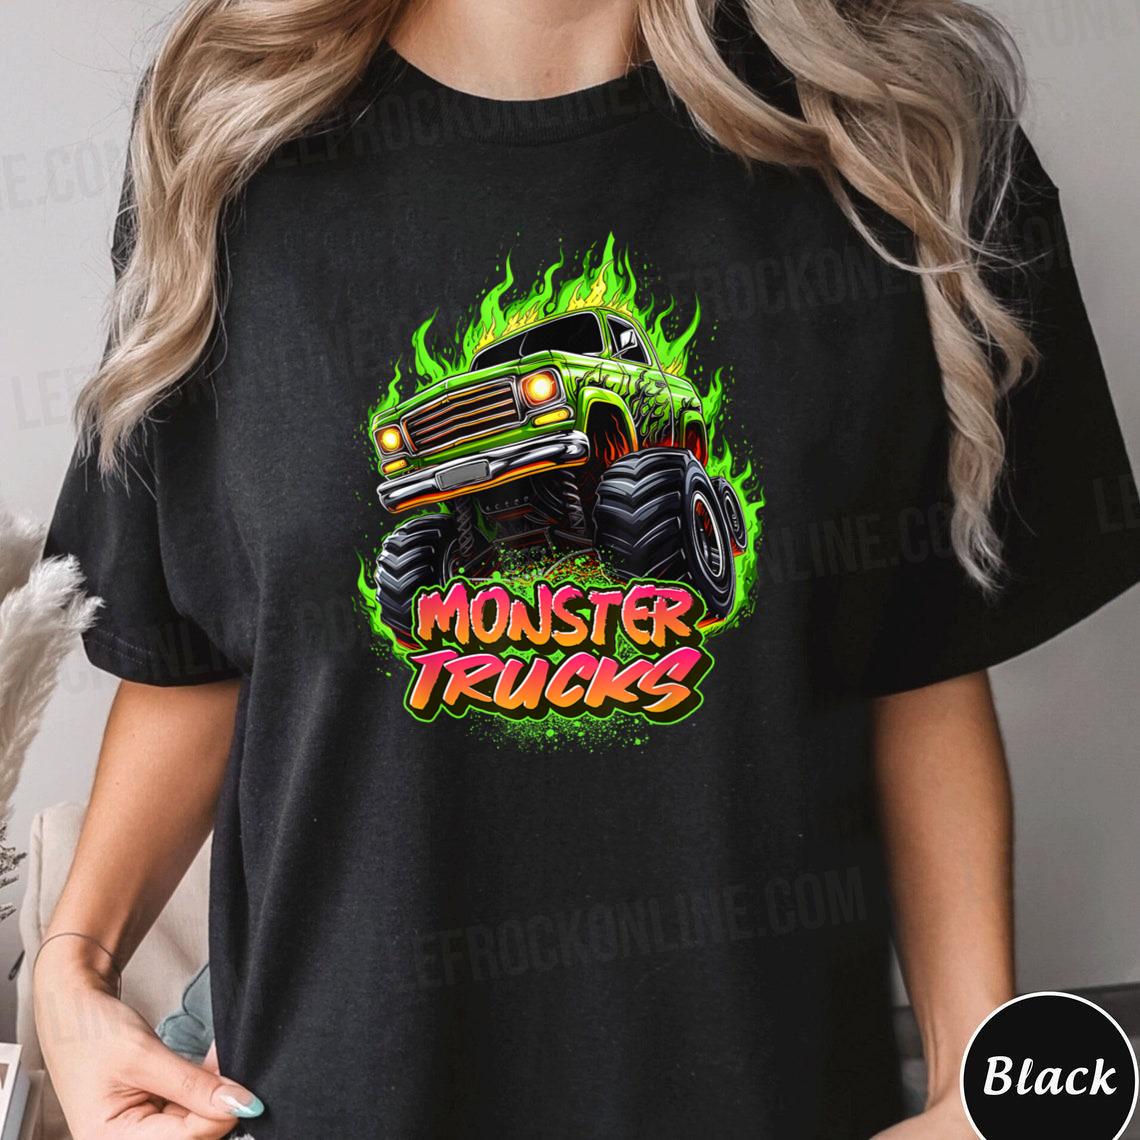 Monster Truck for Toddlers, Kids Monster Truck Vintage